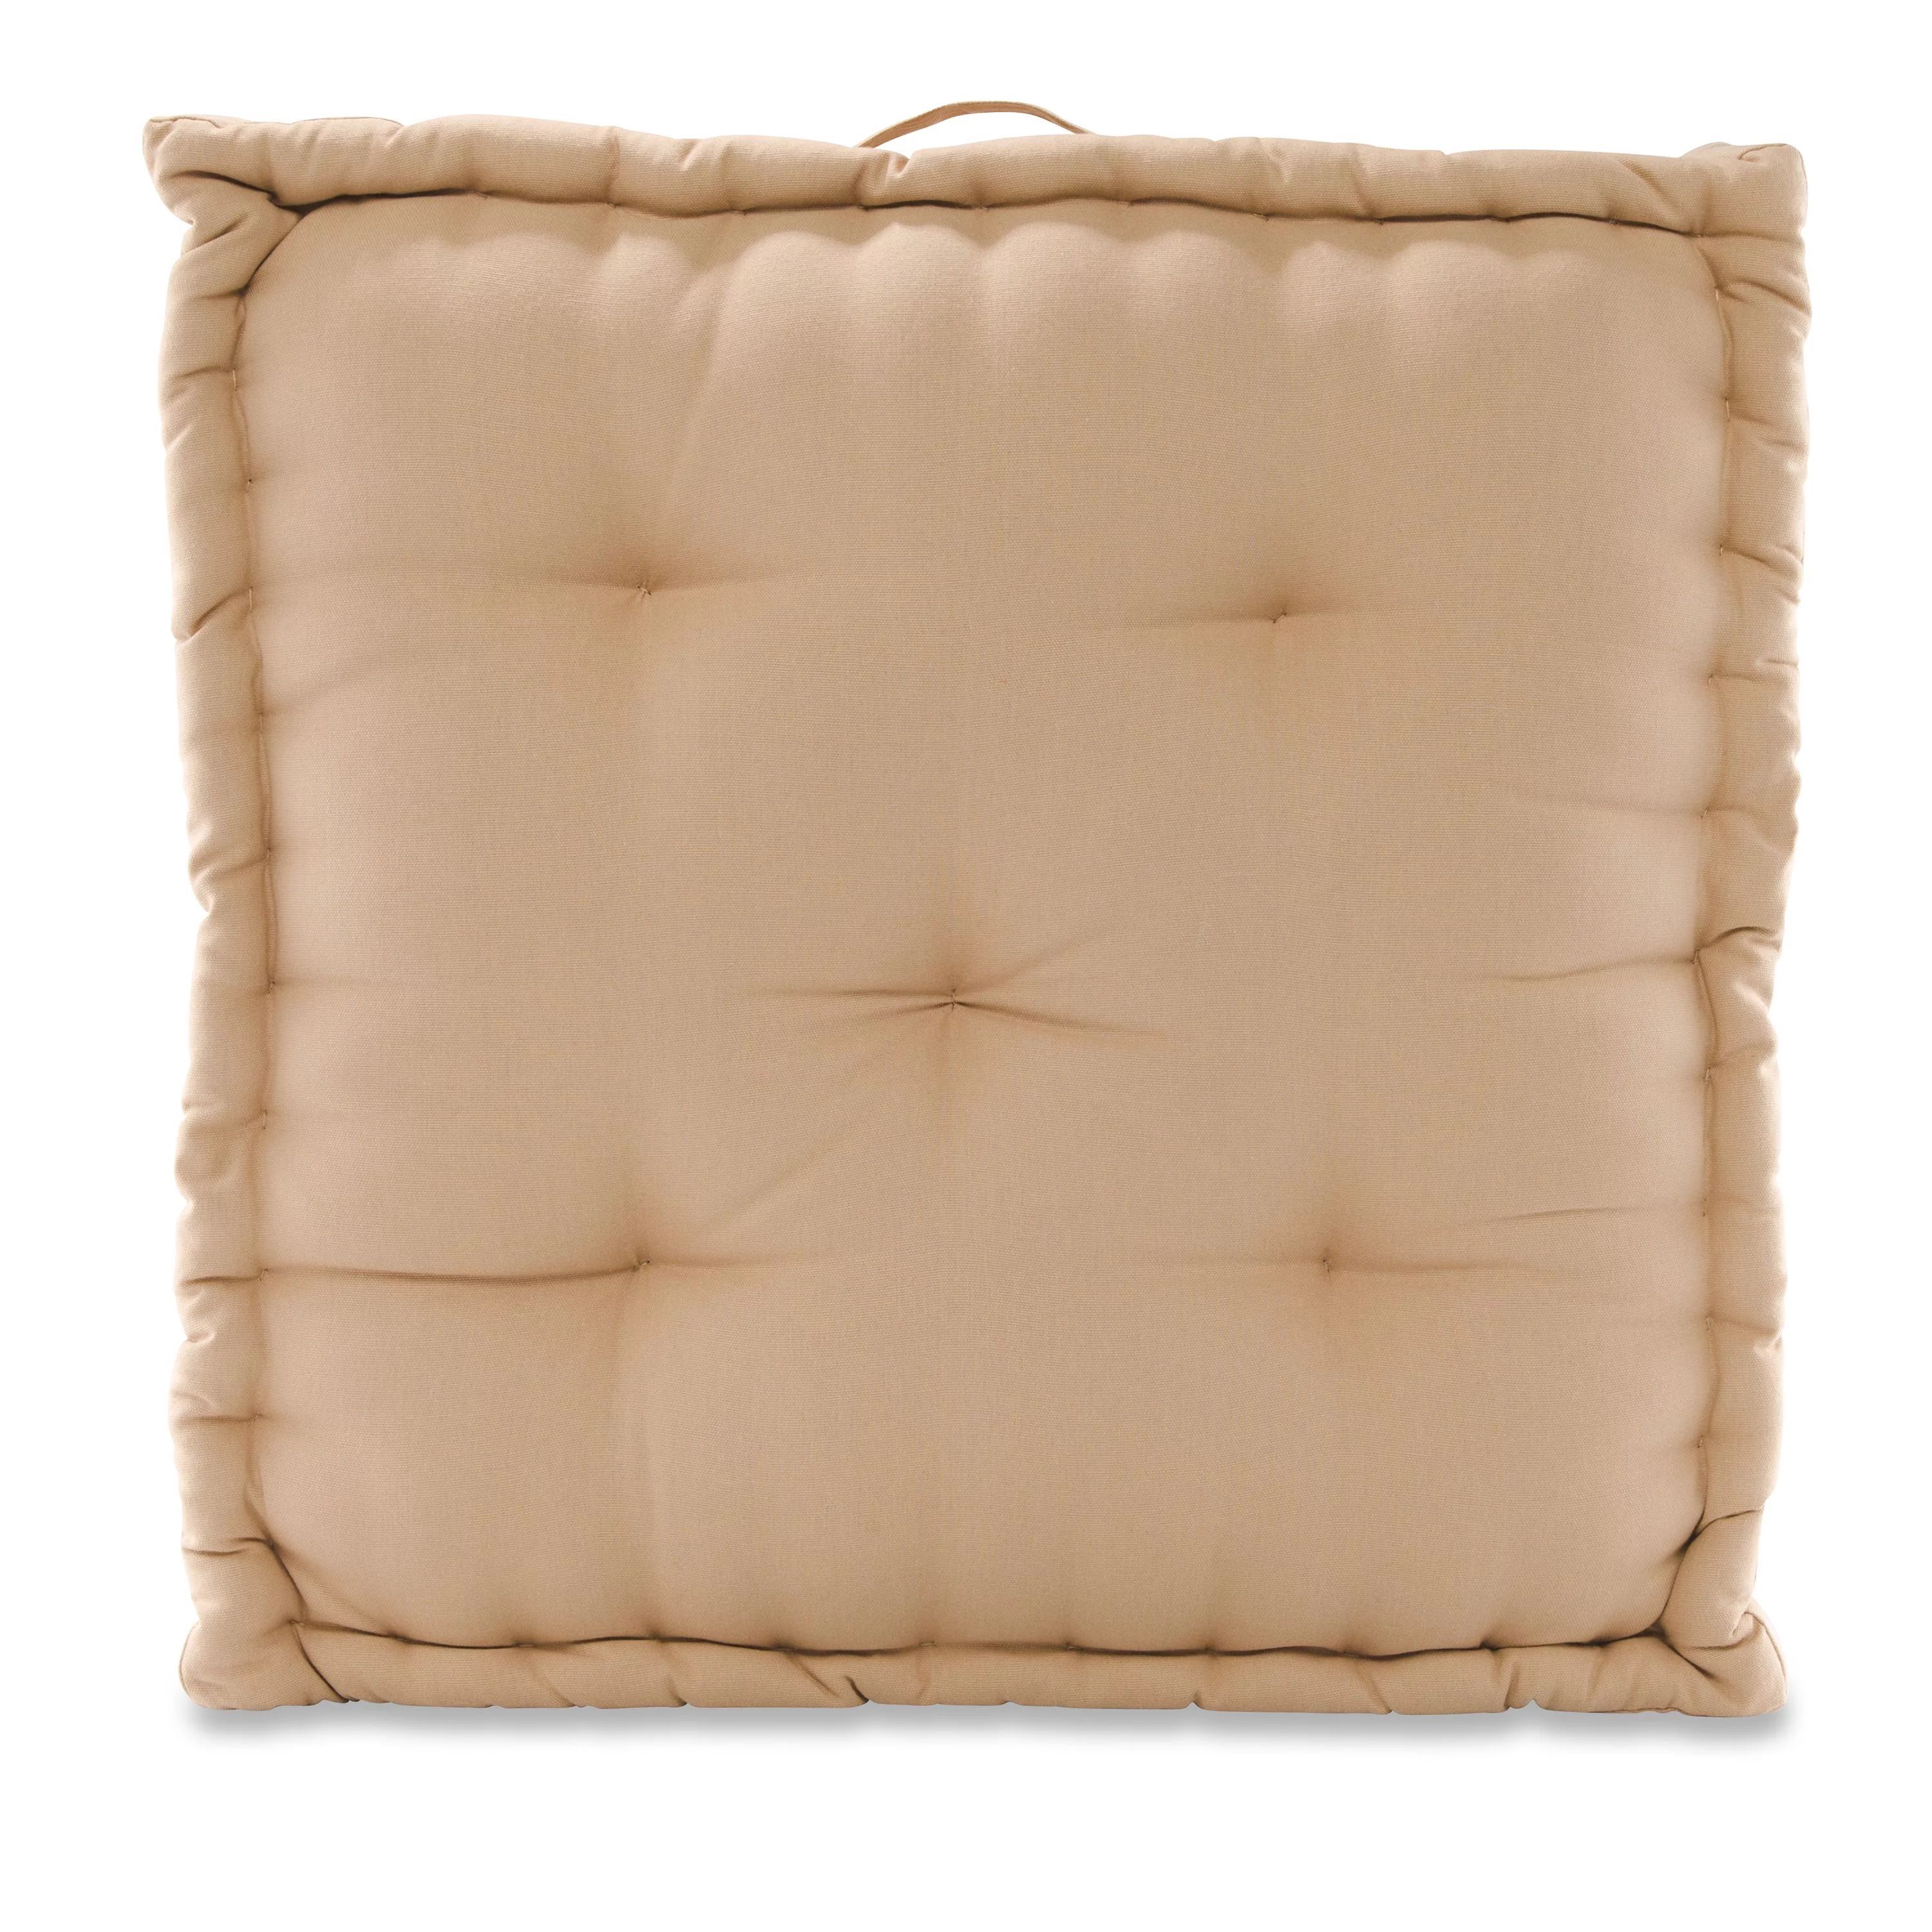 Better Homes & Gardens Tufted Square Floor Cushion, Size 24" x 24", Vanilla Bean | Walmart (US)